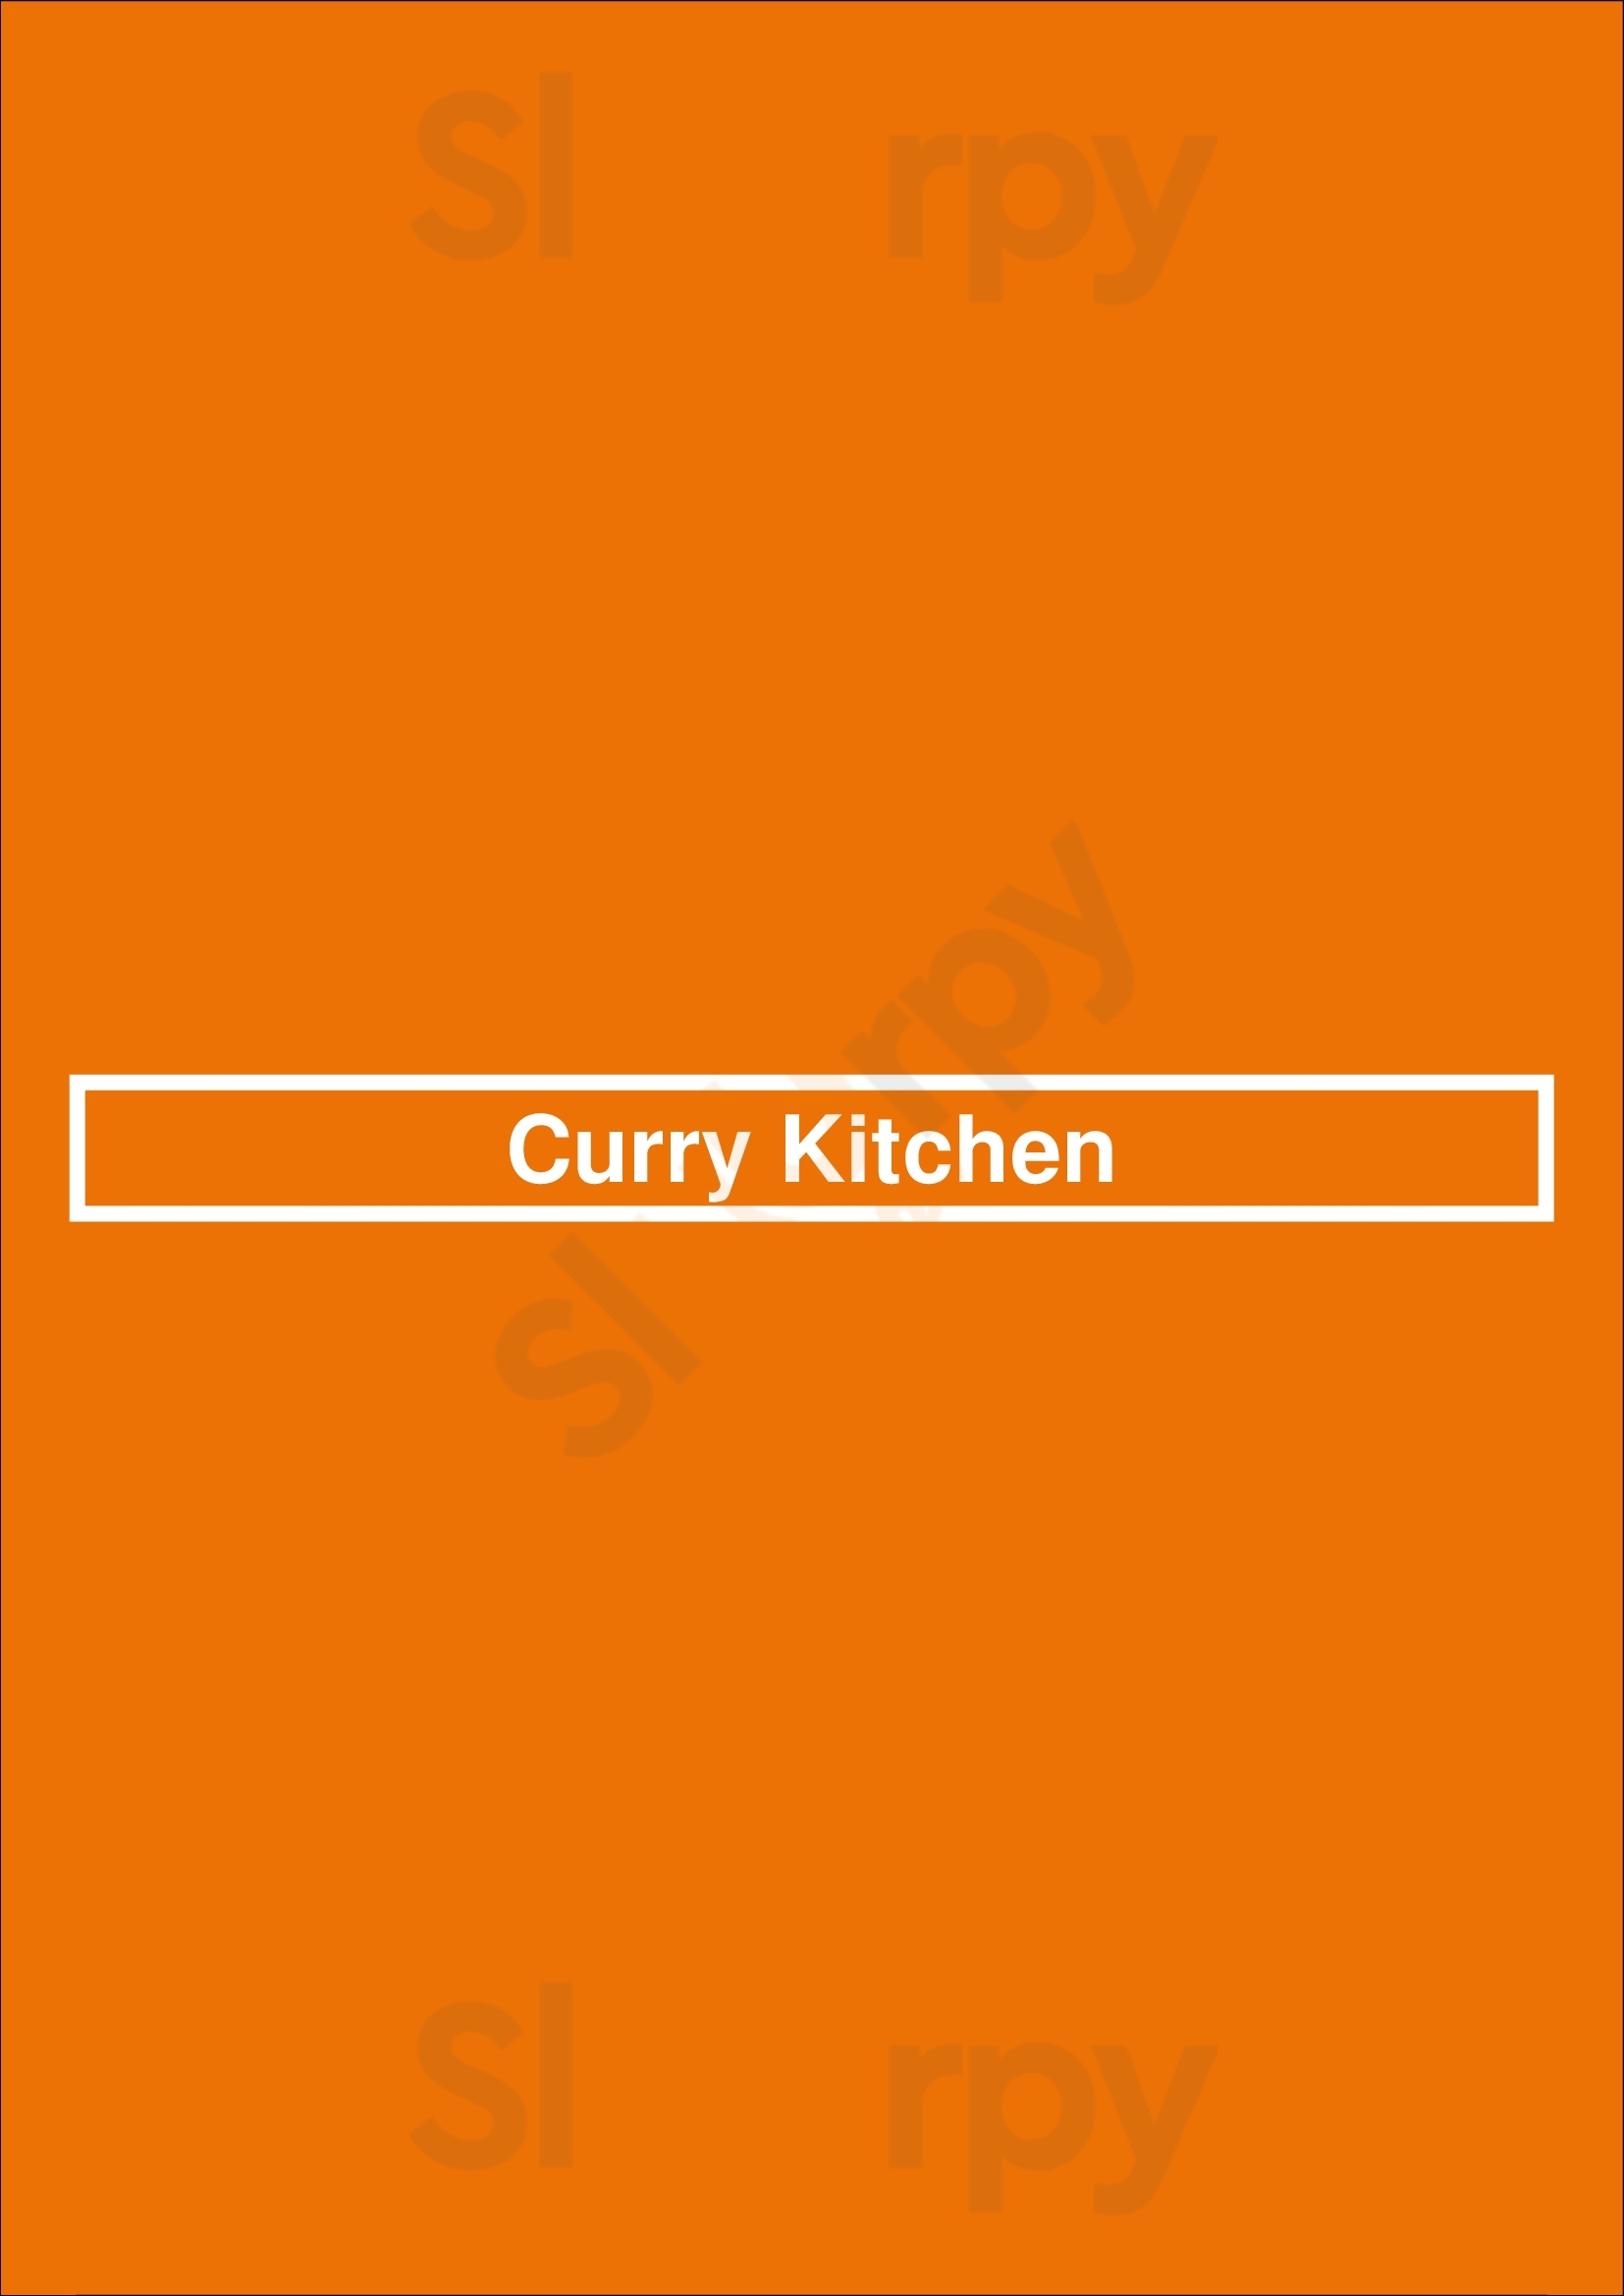 Curry Kitchen Gr Grand Rapids Menu - 1